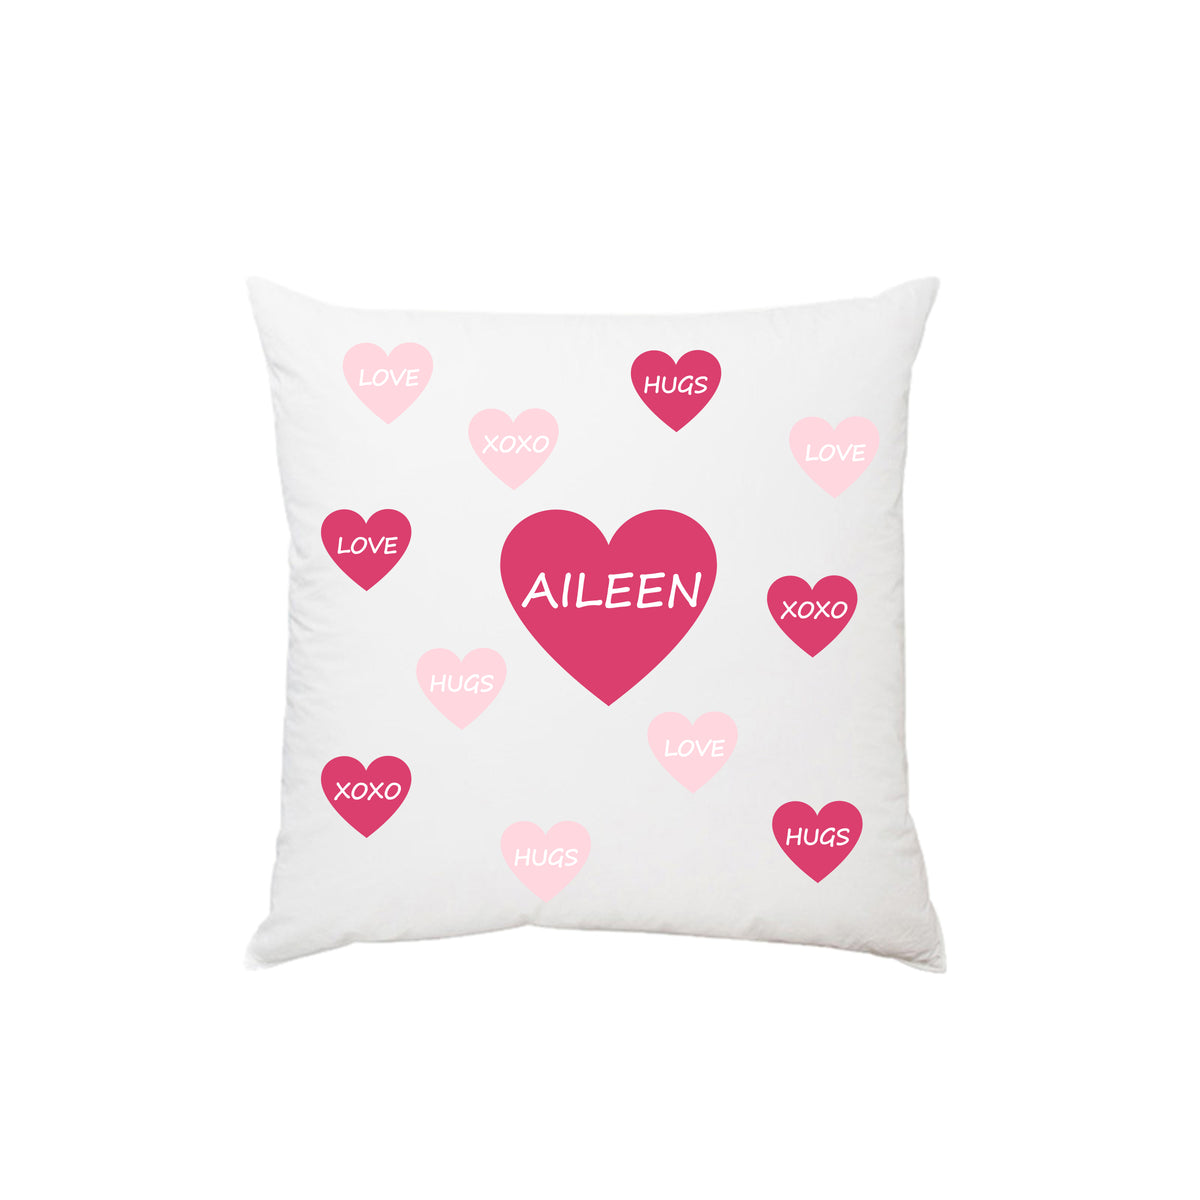 Customized Couple Pillow | 情人節禮物 客製姓名 情侶抱枕